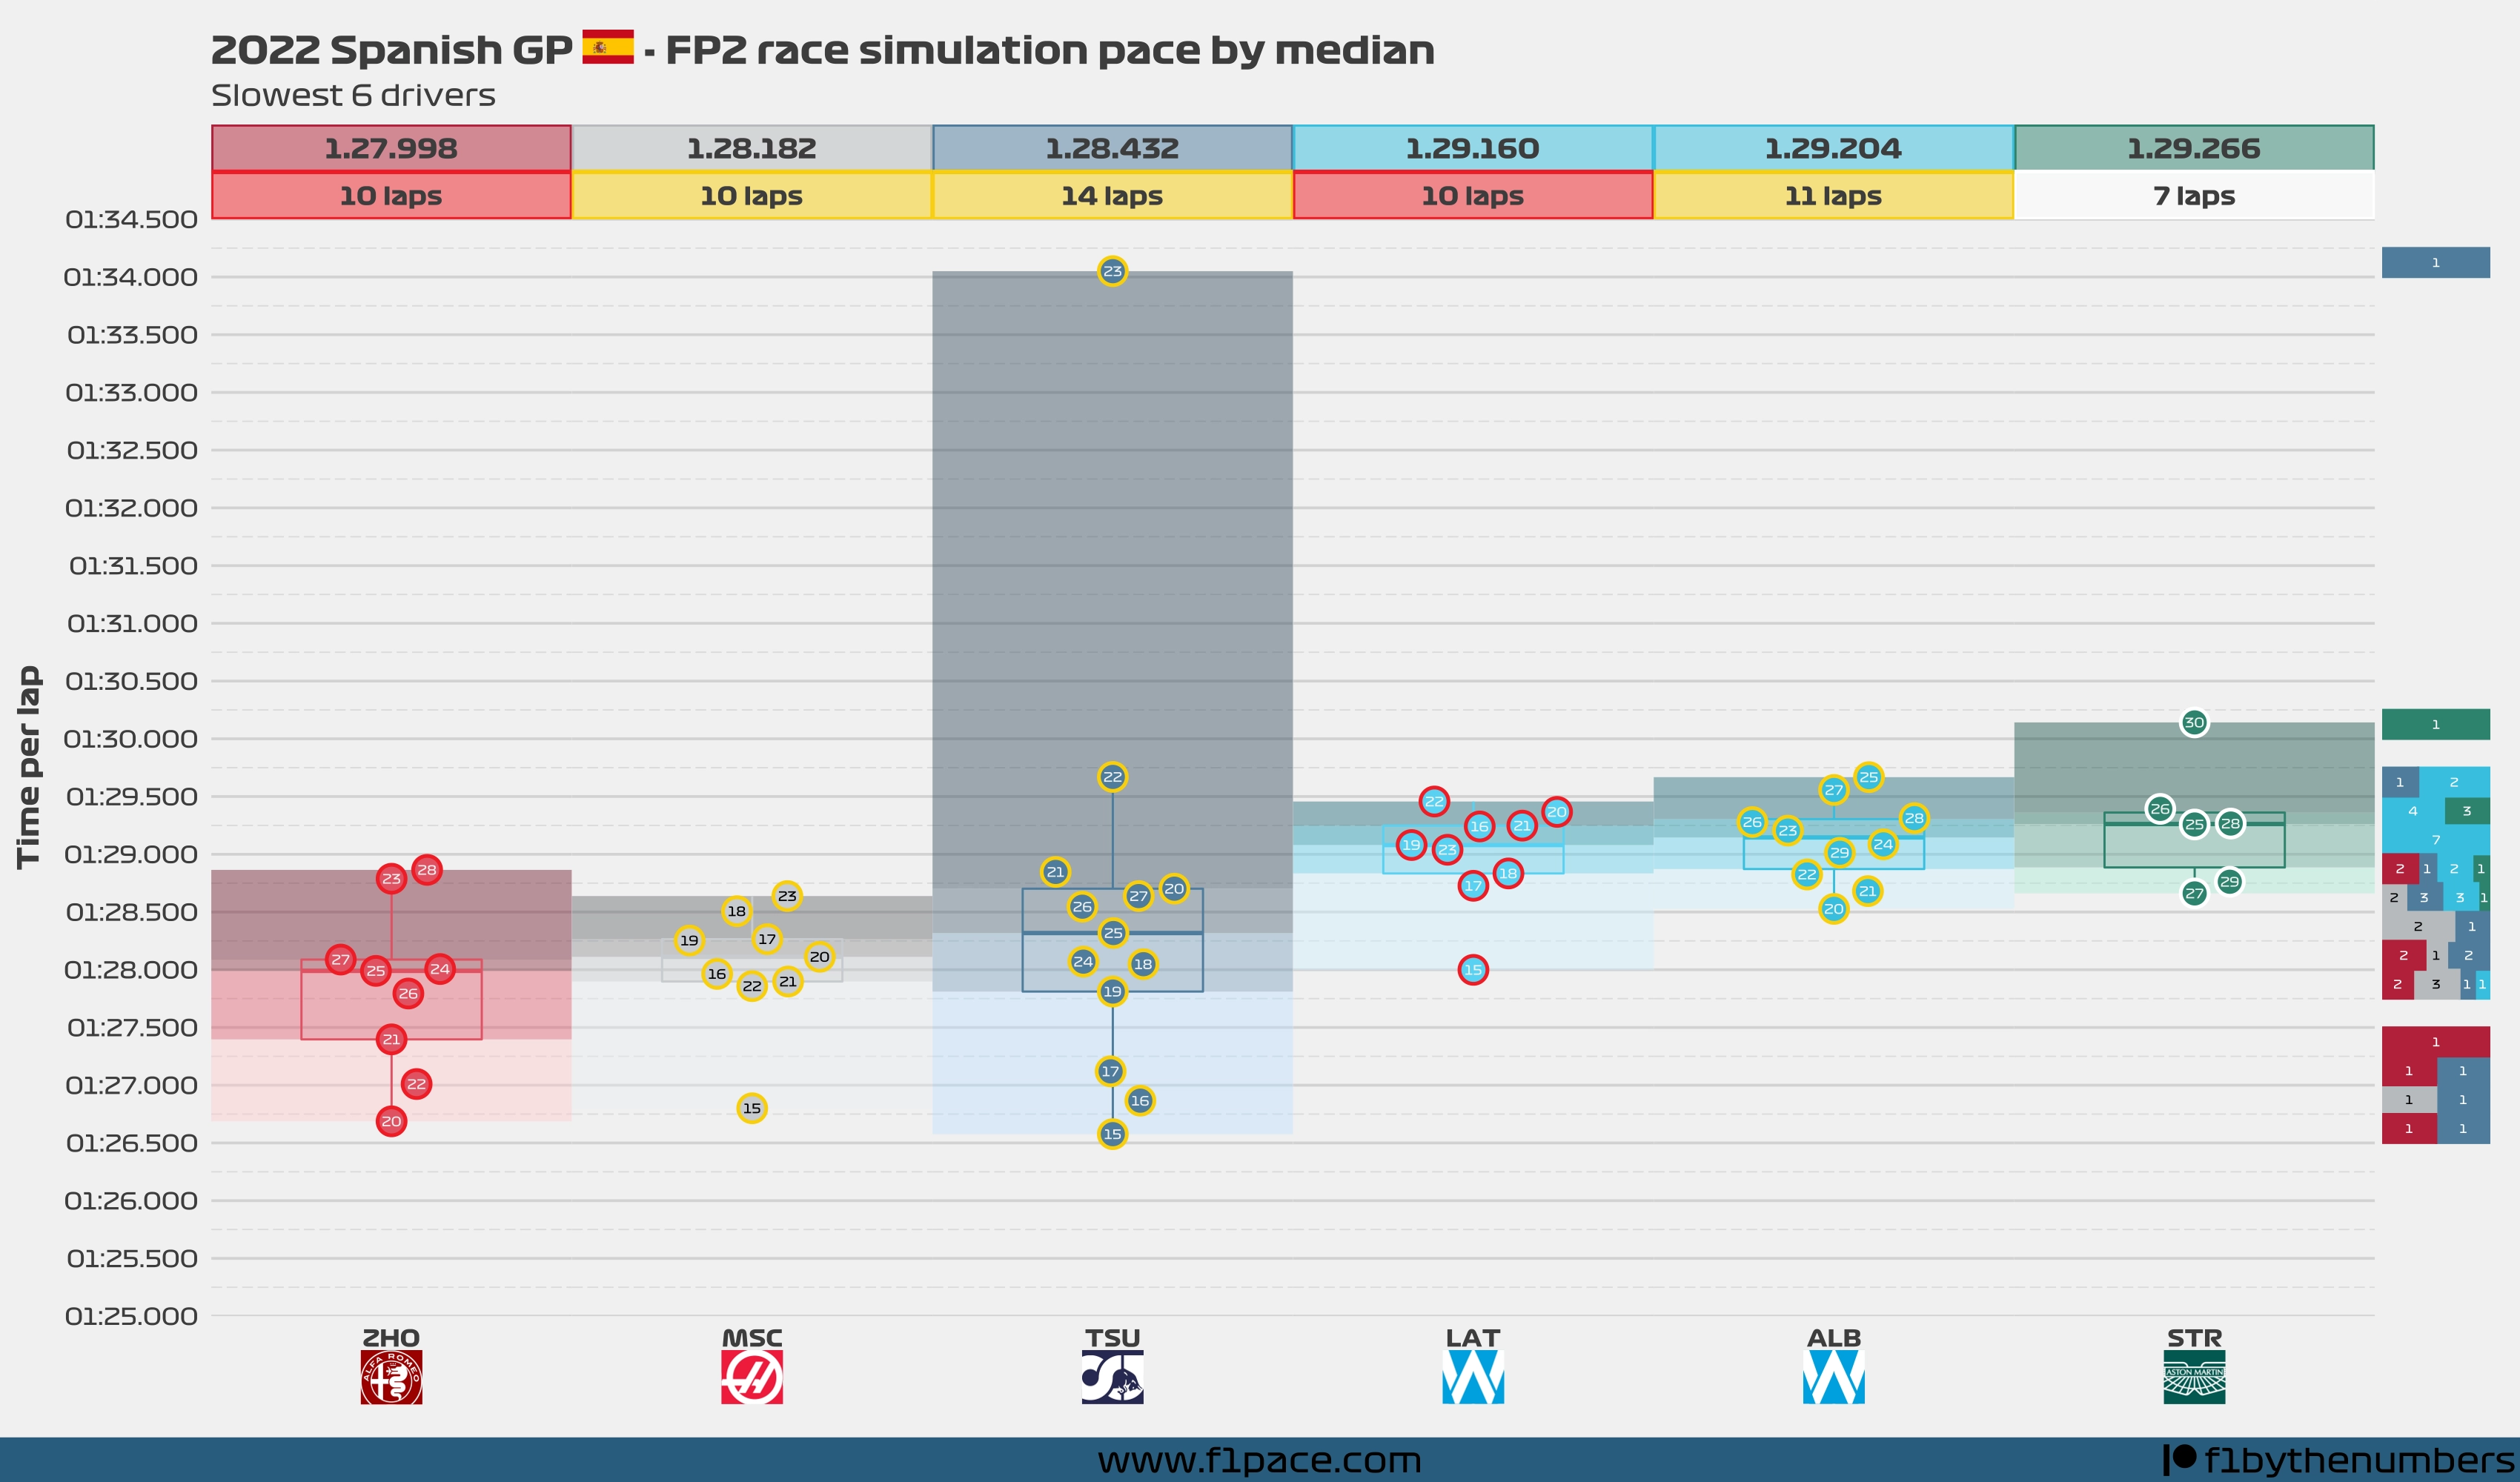 Race simulation pace: Bottom 6 drivers